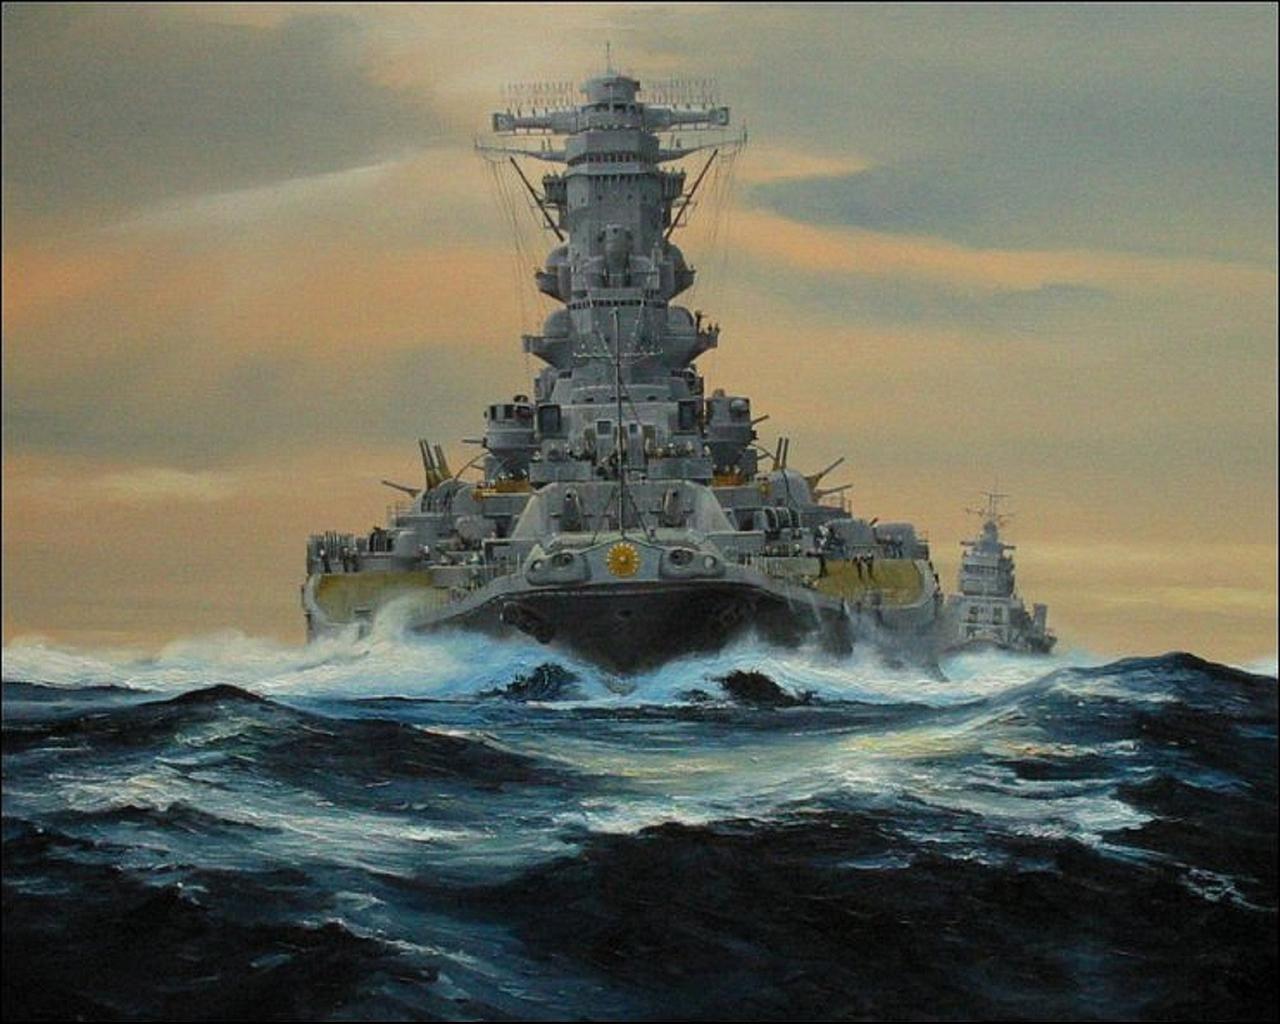 Battleship Yamato Wallpaper. World of warships wallpaper, Battleship, Yamato battleship